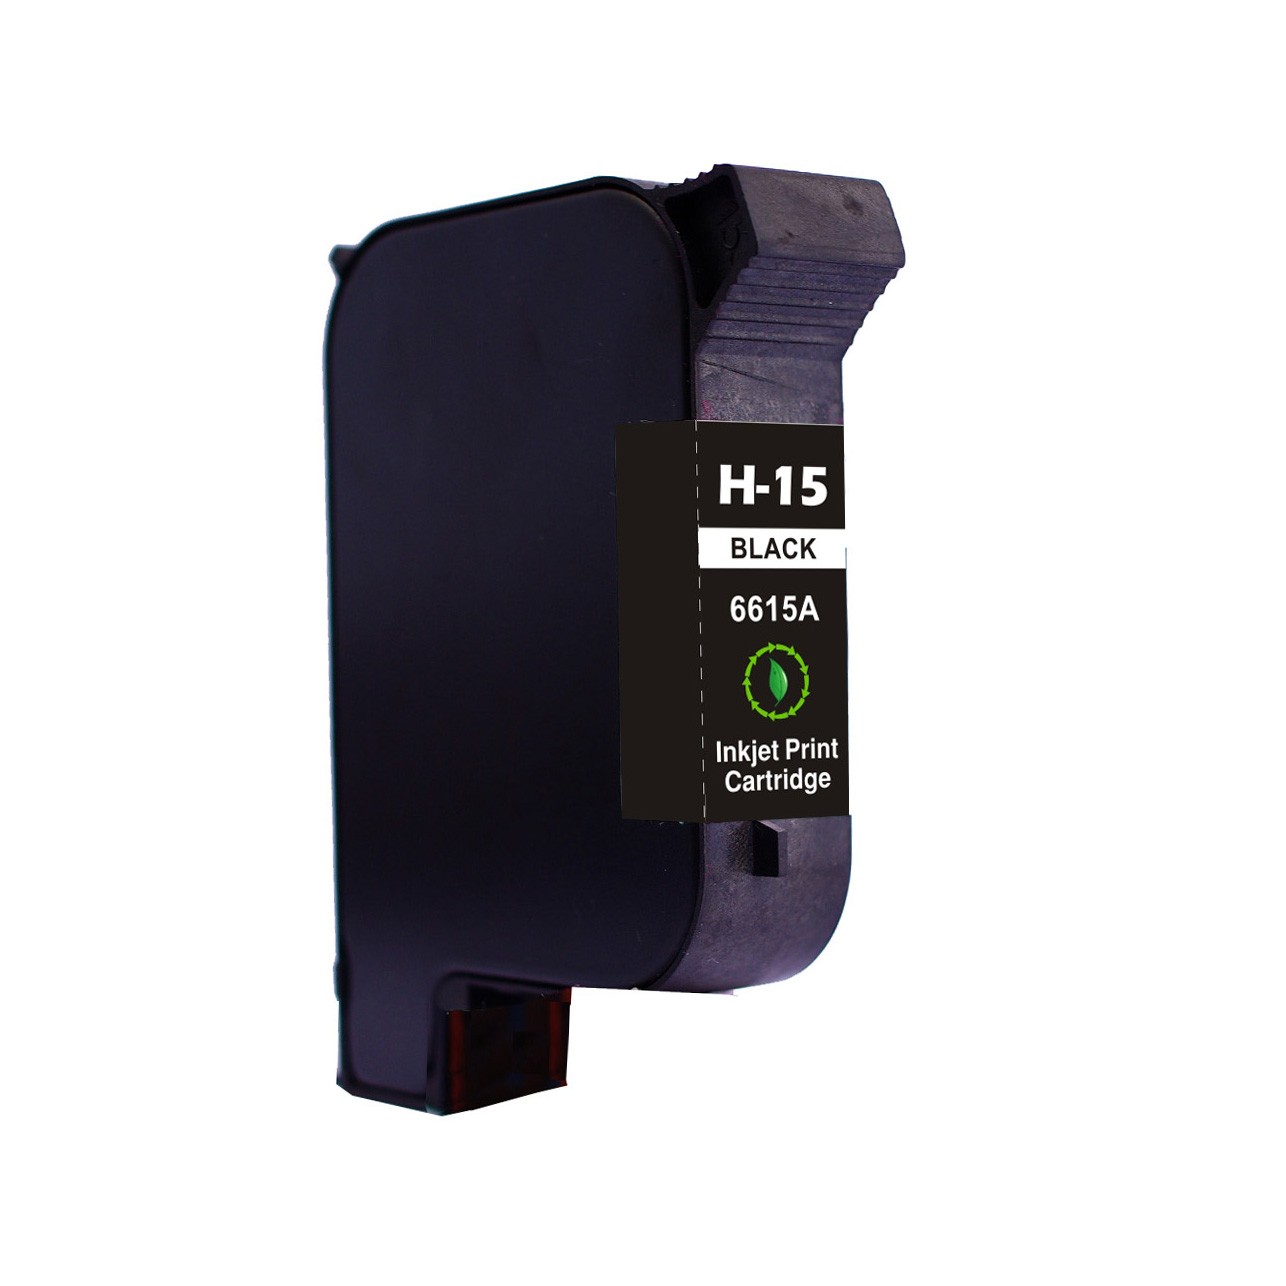 Køb Kompatibel HP 15 - C6615DE blækpatron 48 ml sort - Pris 208.00 kr.